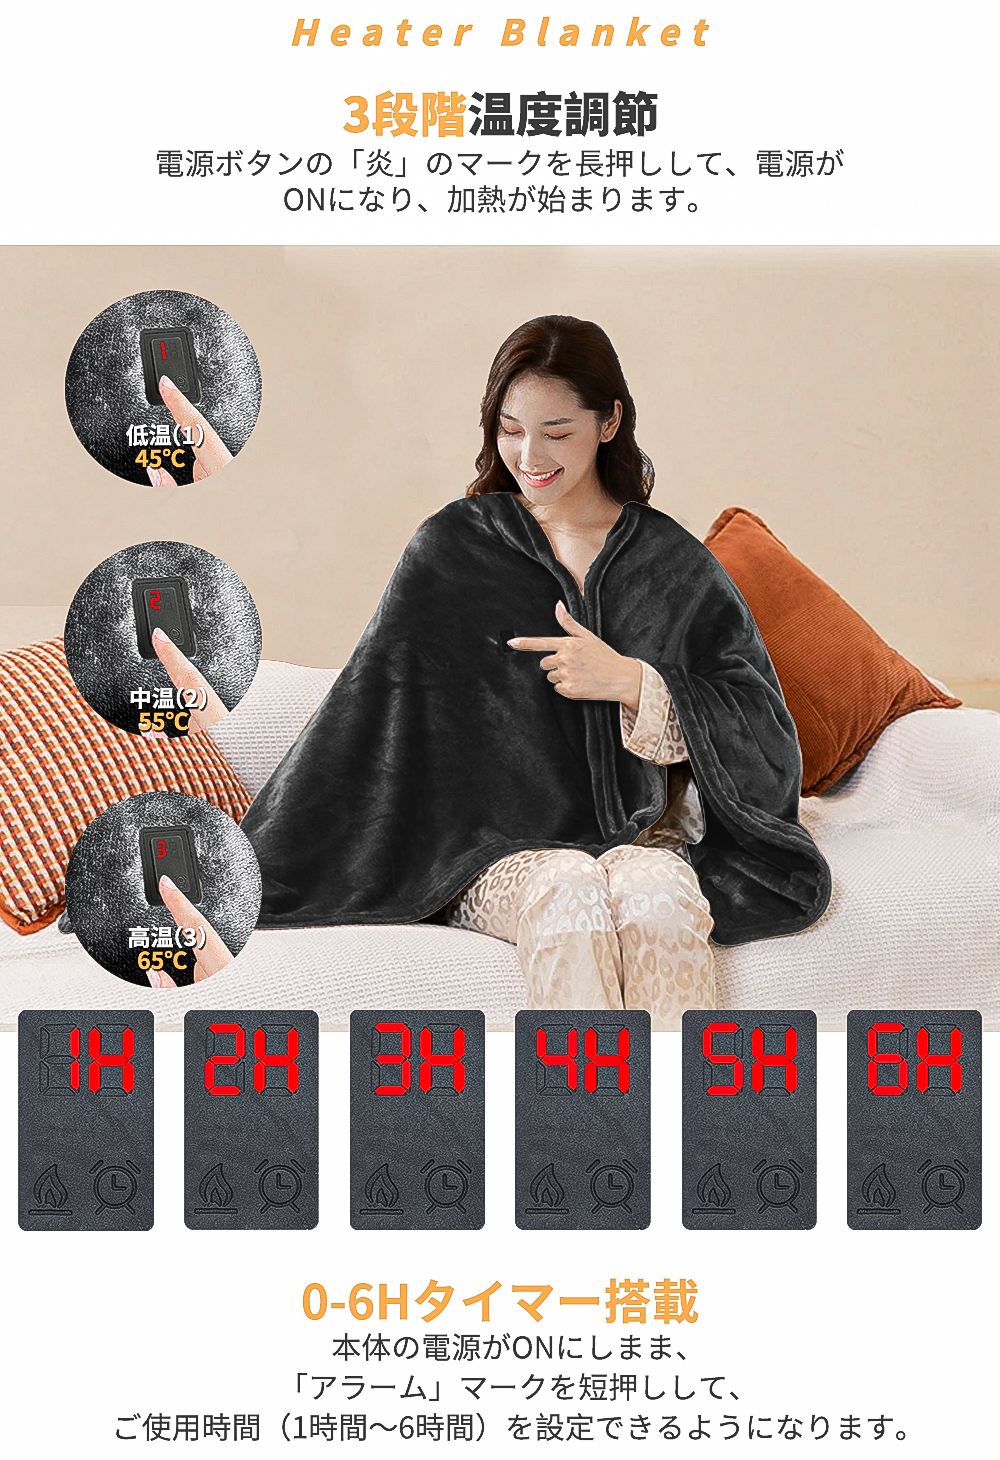 電気毛布 USB電気敷き毛布 掛け敷き兼用 3段階温度調節 - 電気毛布